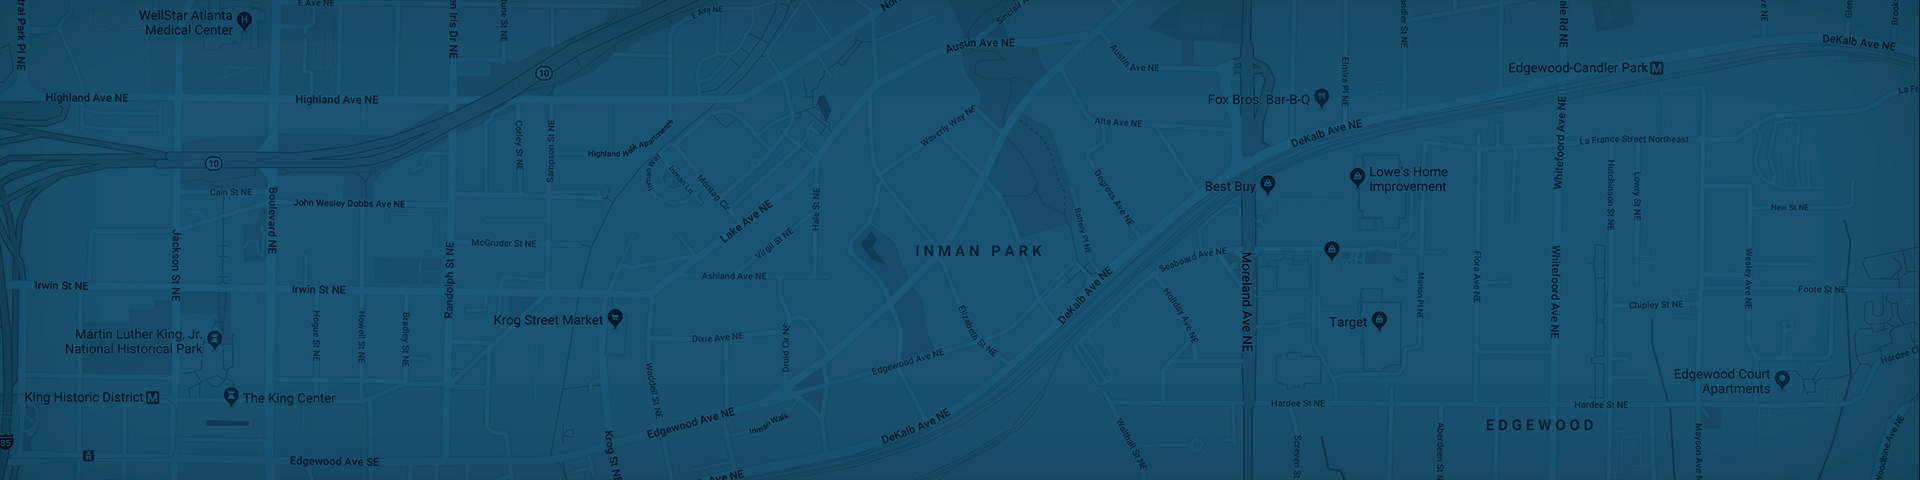 Inman Park Map